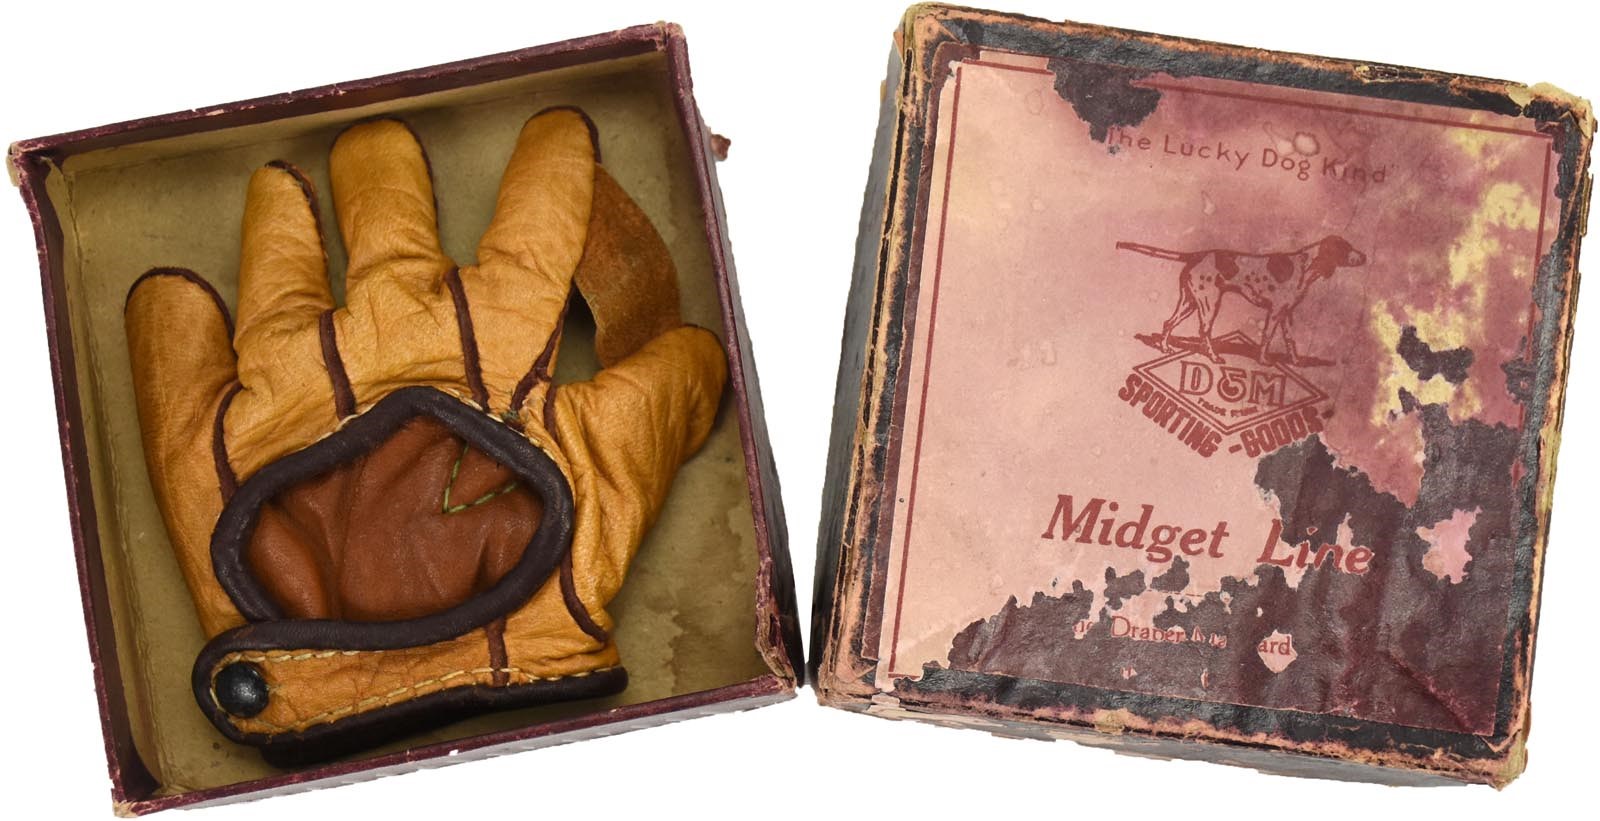 1930 "Midget Line" Draper & Maynard Salesman's Sample Baseball Glove in Box